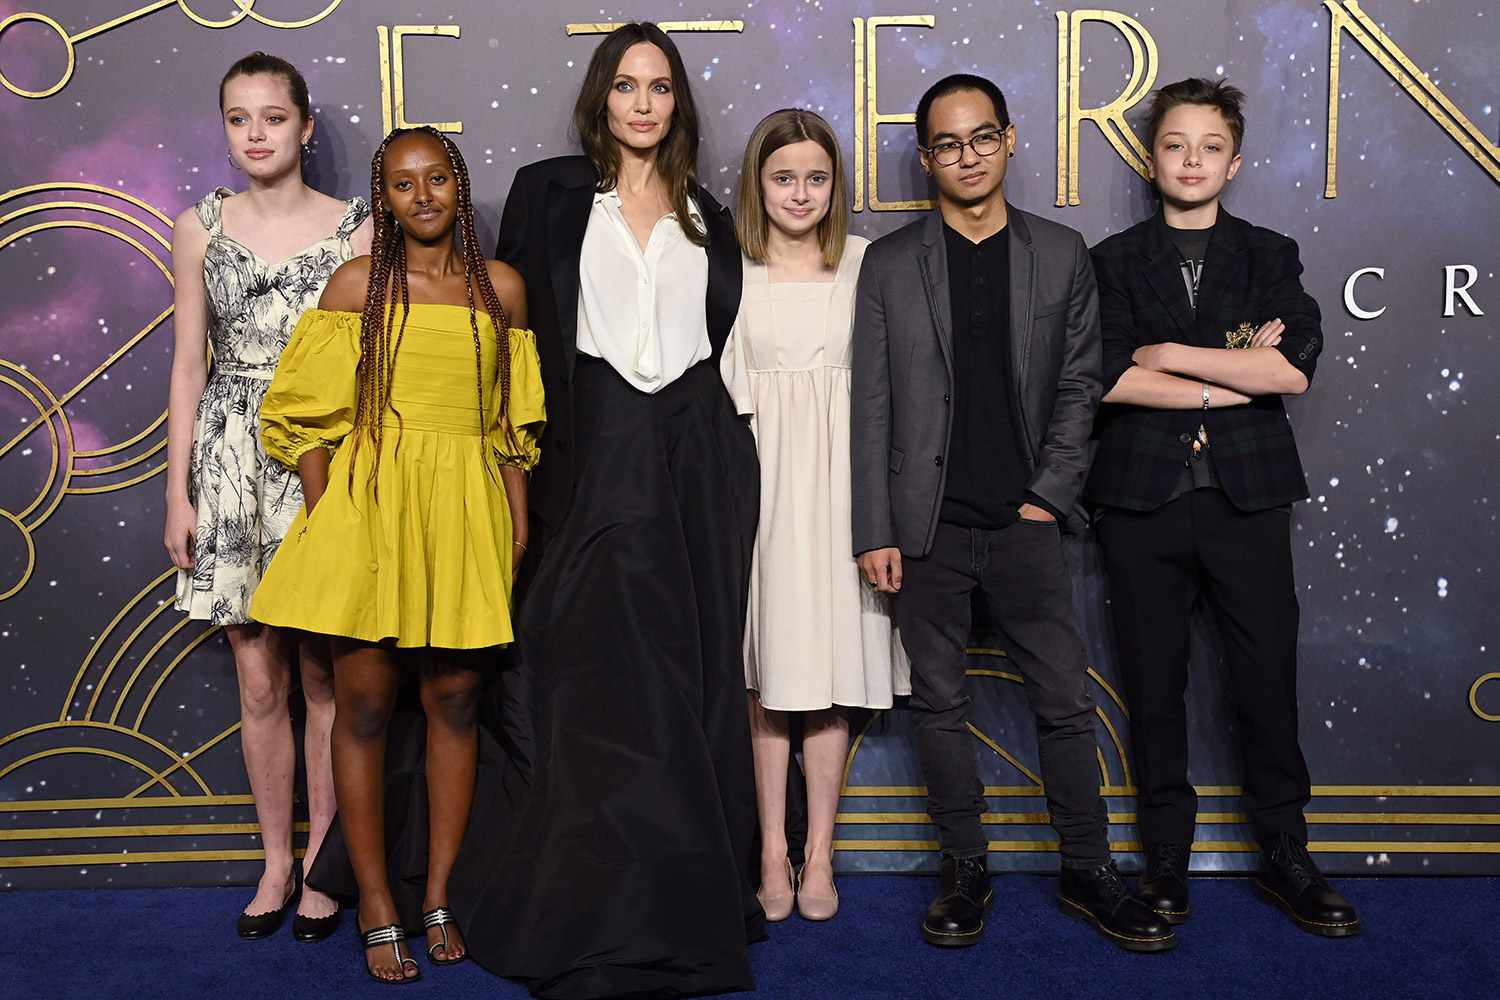 Shiloh Jolie-Pitt, Zahara Jolie-Pitt, Angelina Jolie, Vivienne Jolie-Pitt, Maddox Jolie-Pitt and Knox Jolie-Pitt